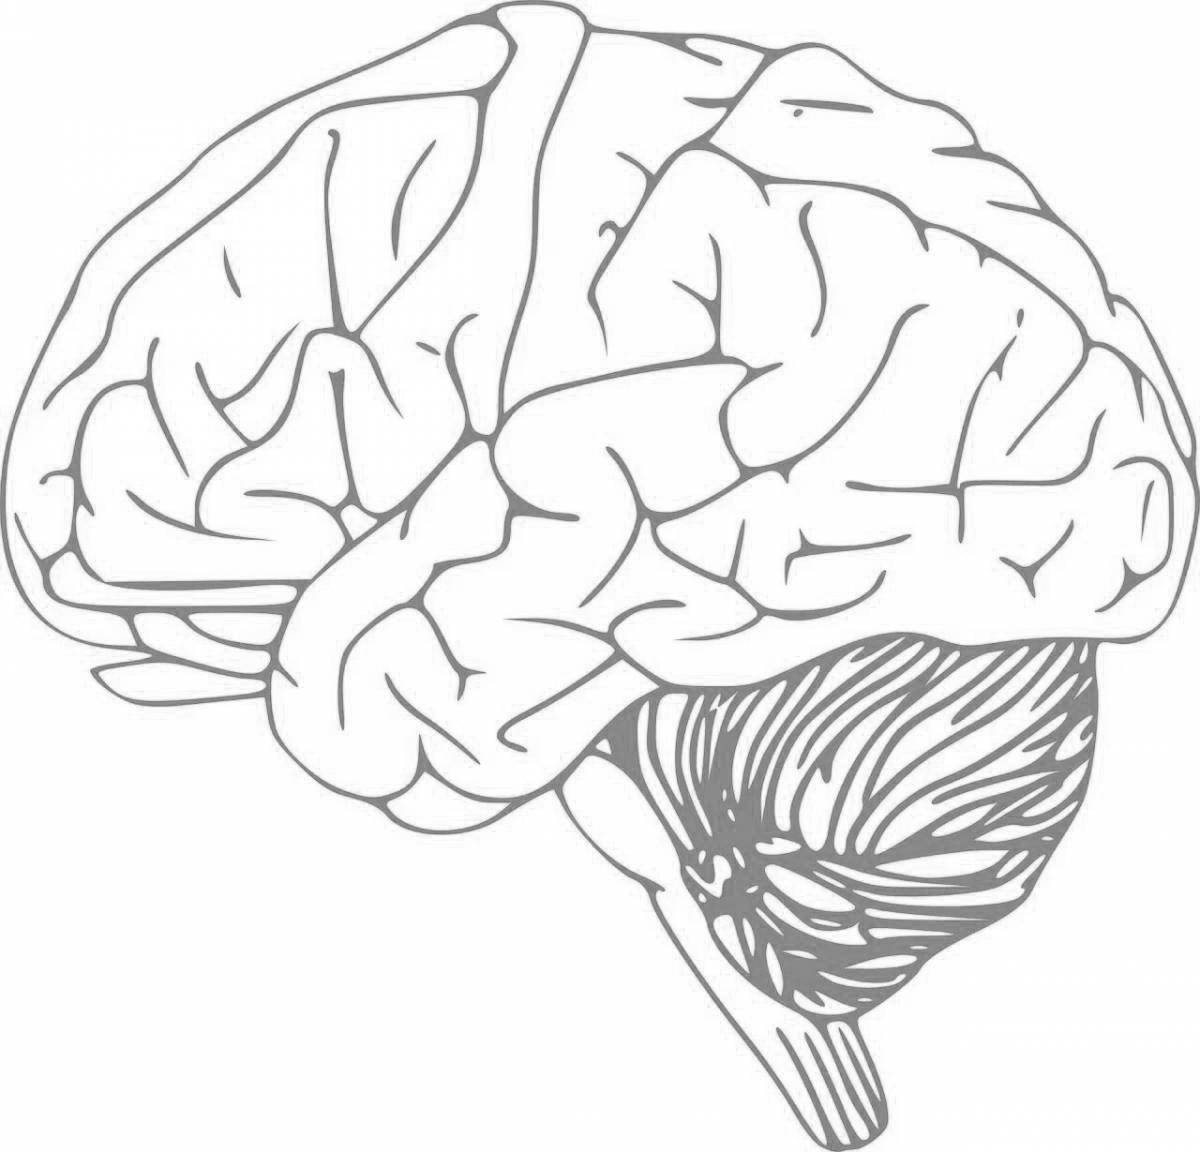 Замысловатая страница раскраски мозга